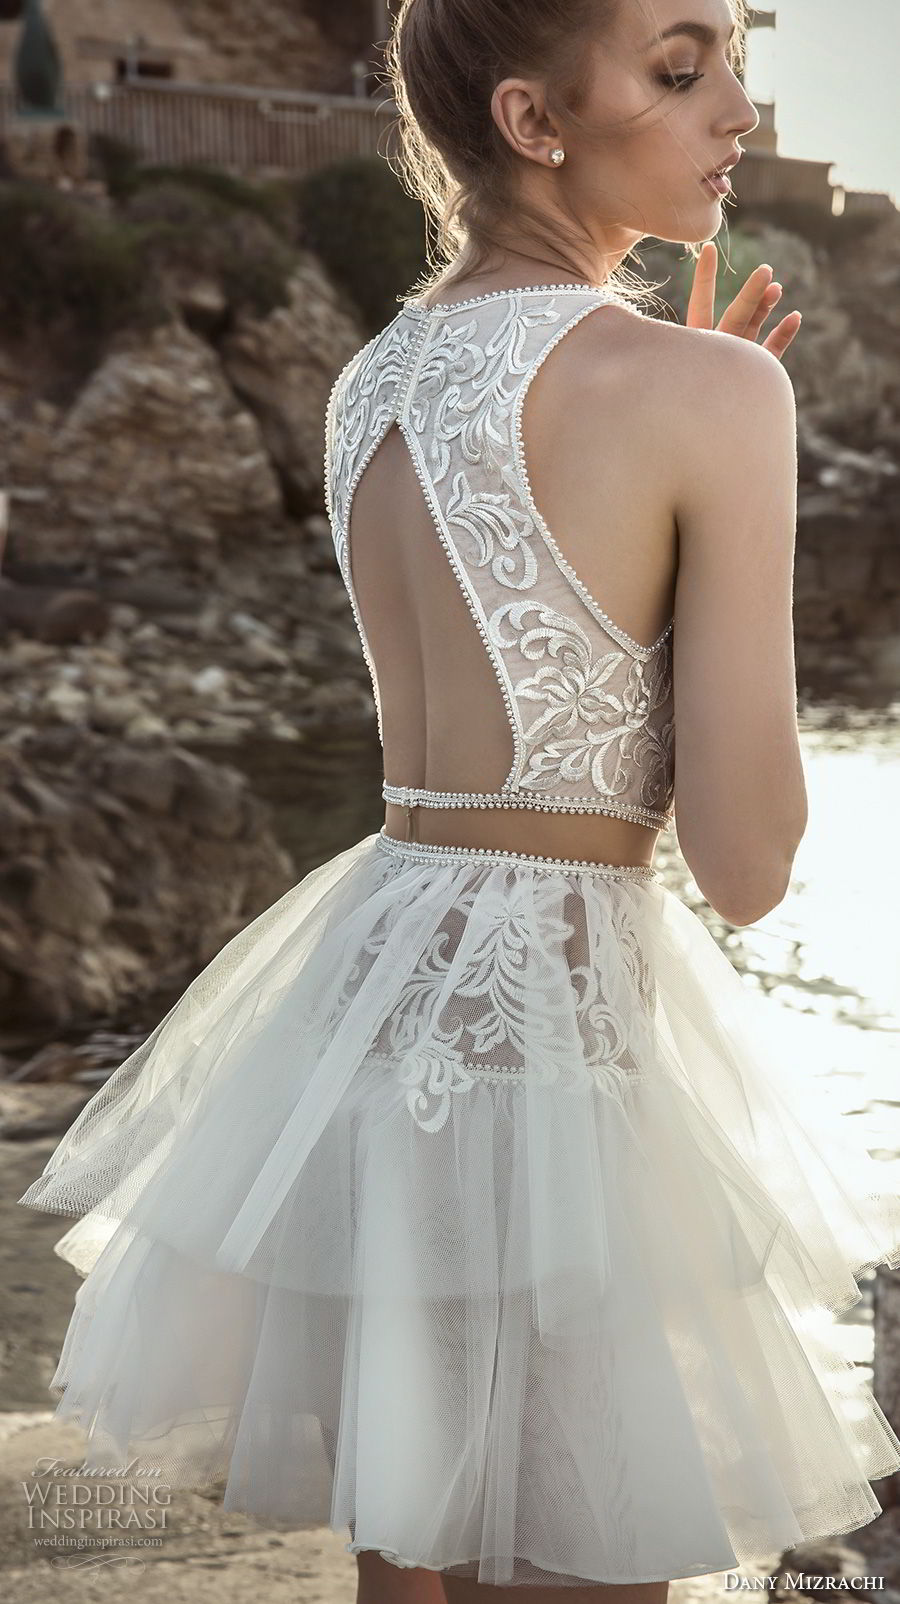 dany mizrachi 2018 bridal sleeveless halter jewel neck heavily embellished bodice tulle skirt above the knee short wedding dress keyhole back (21) bv